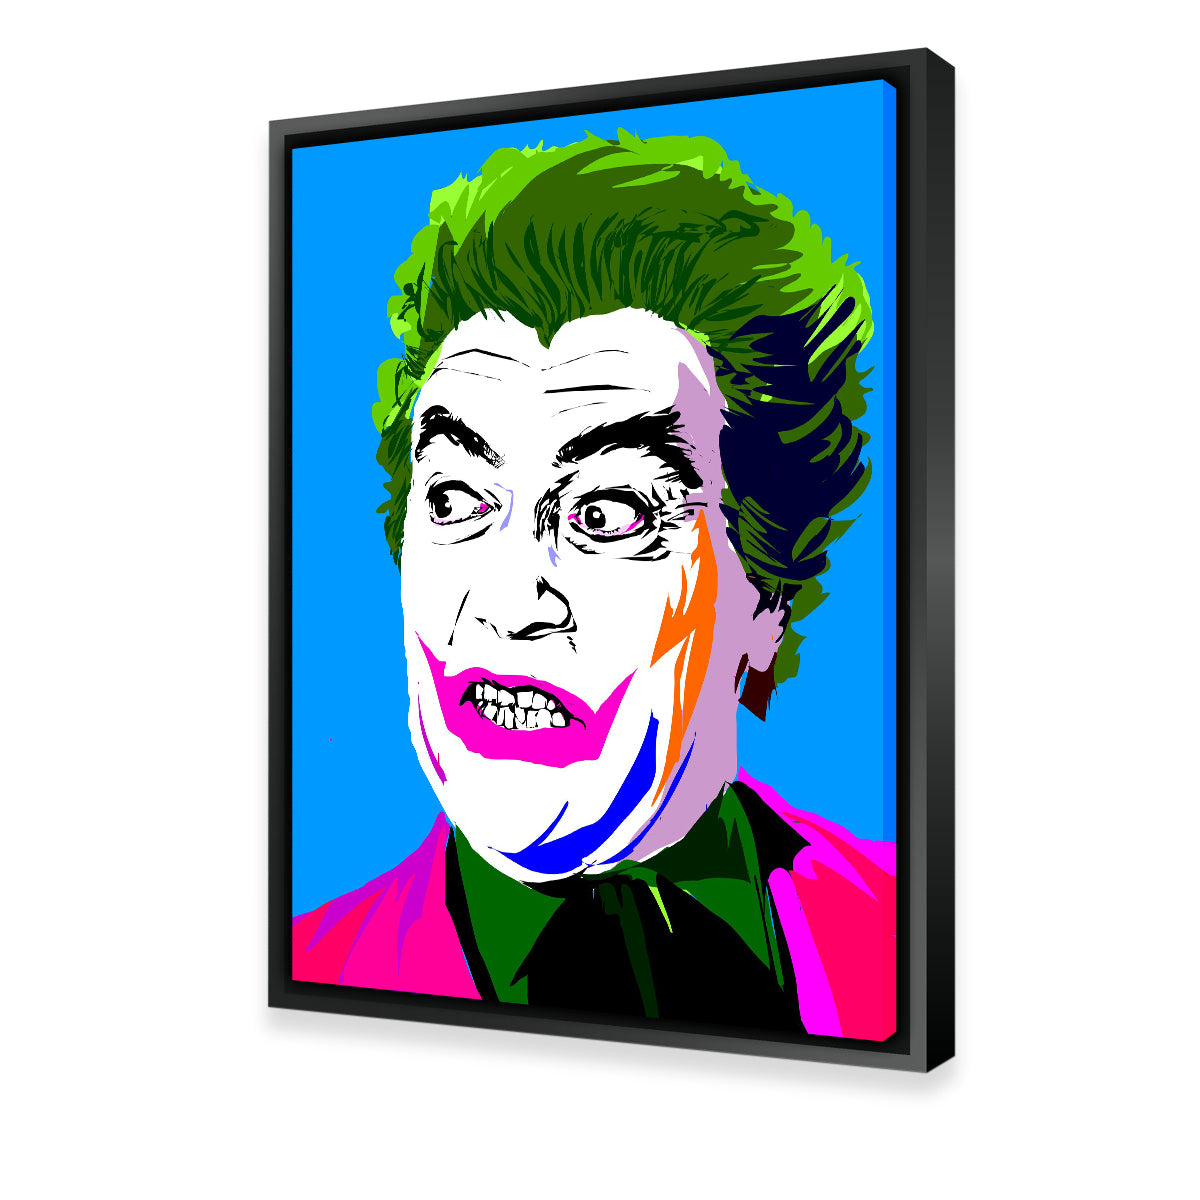 Joker Classic